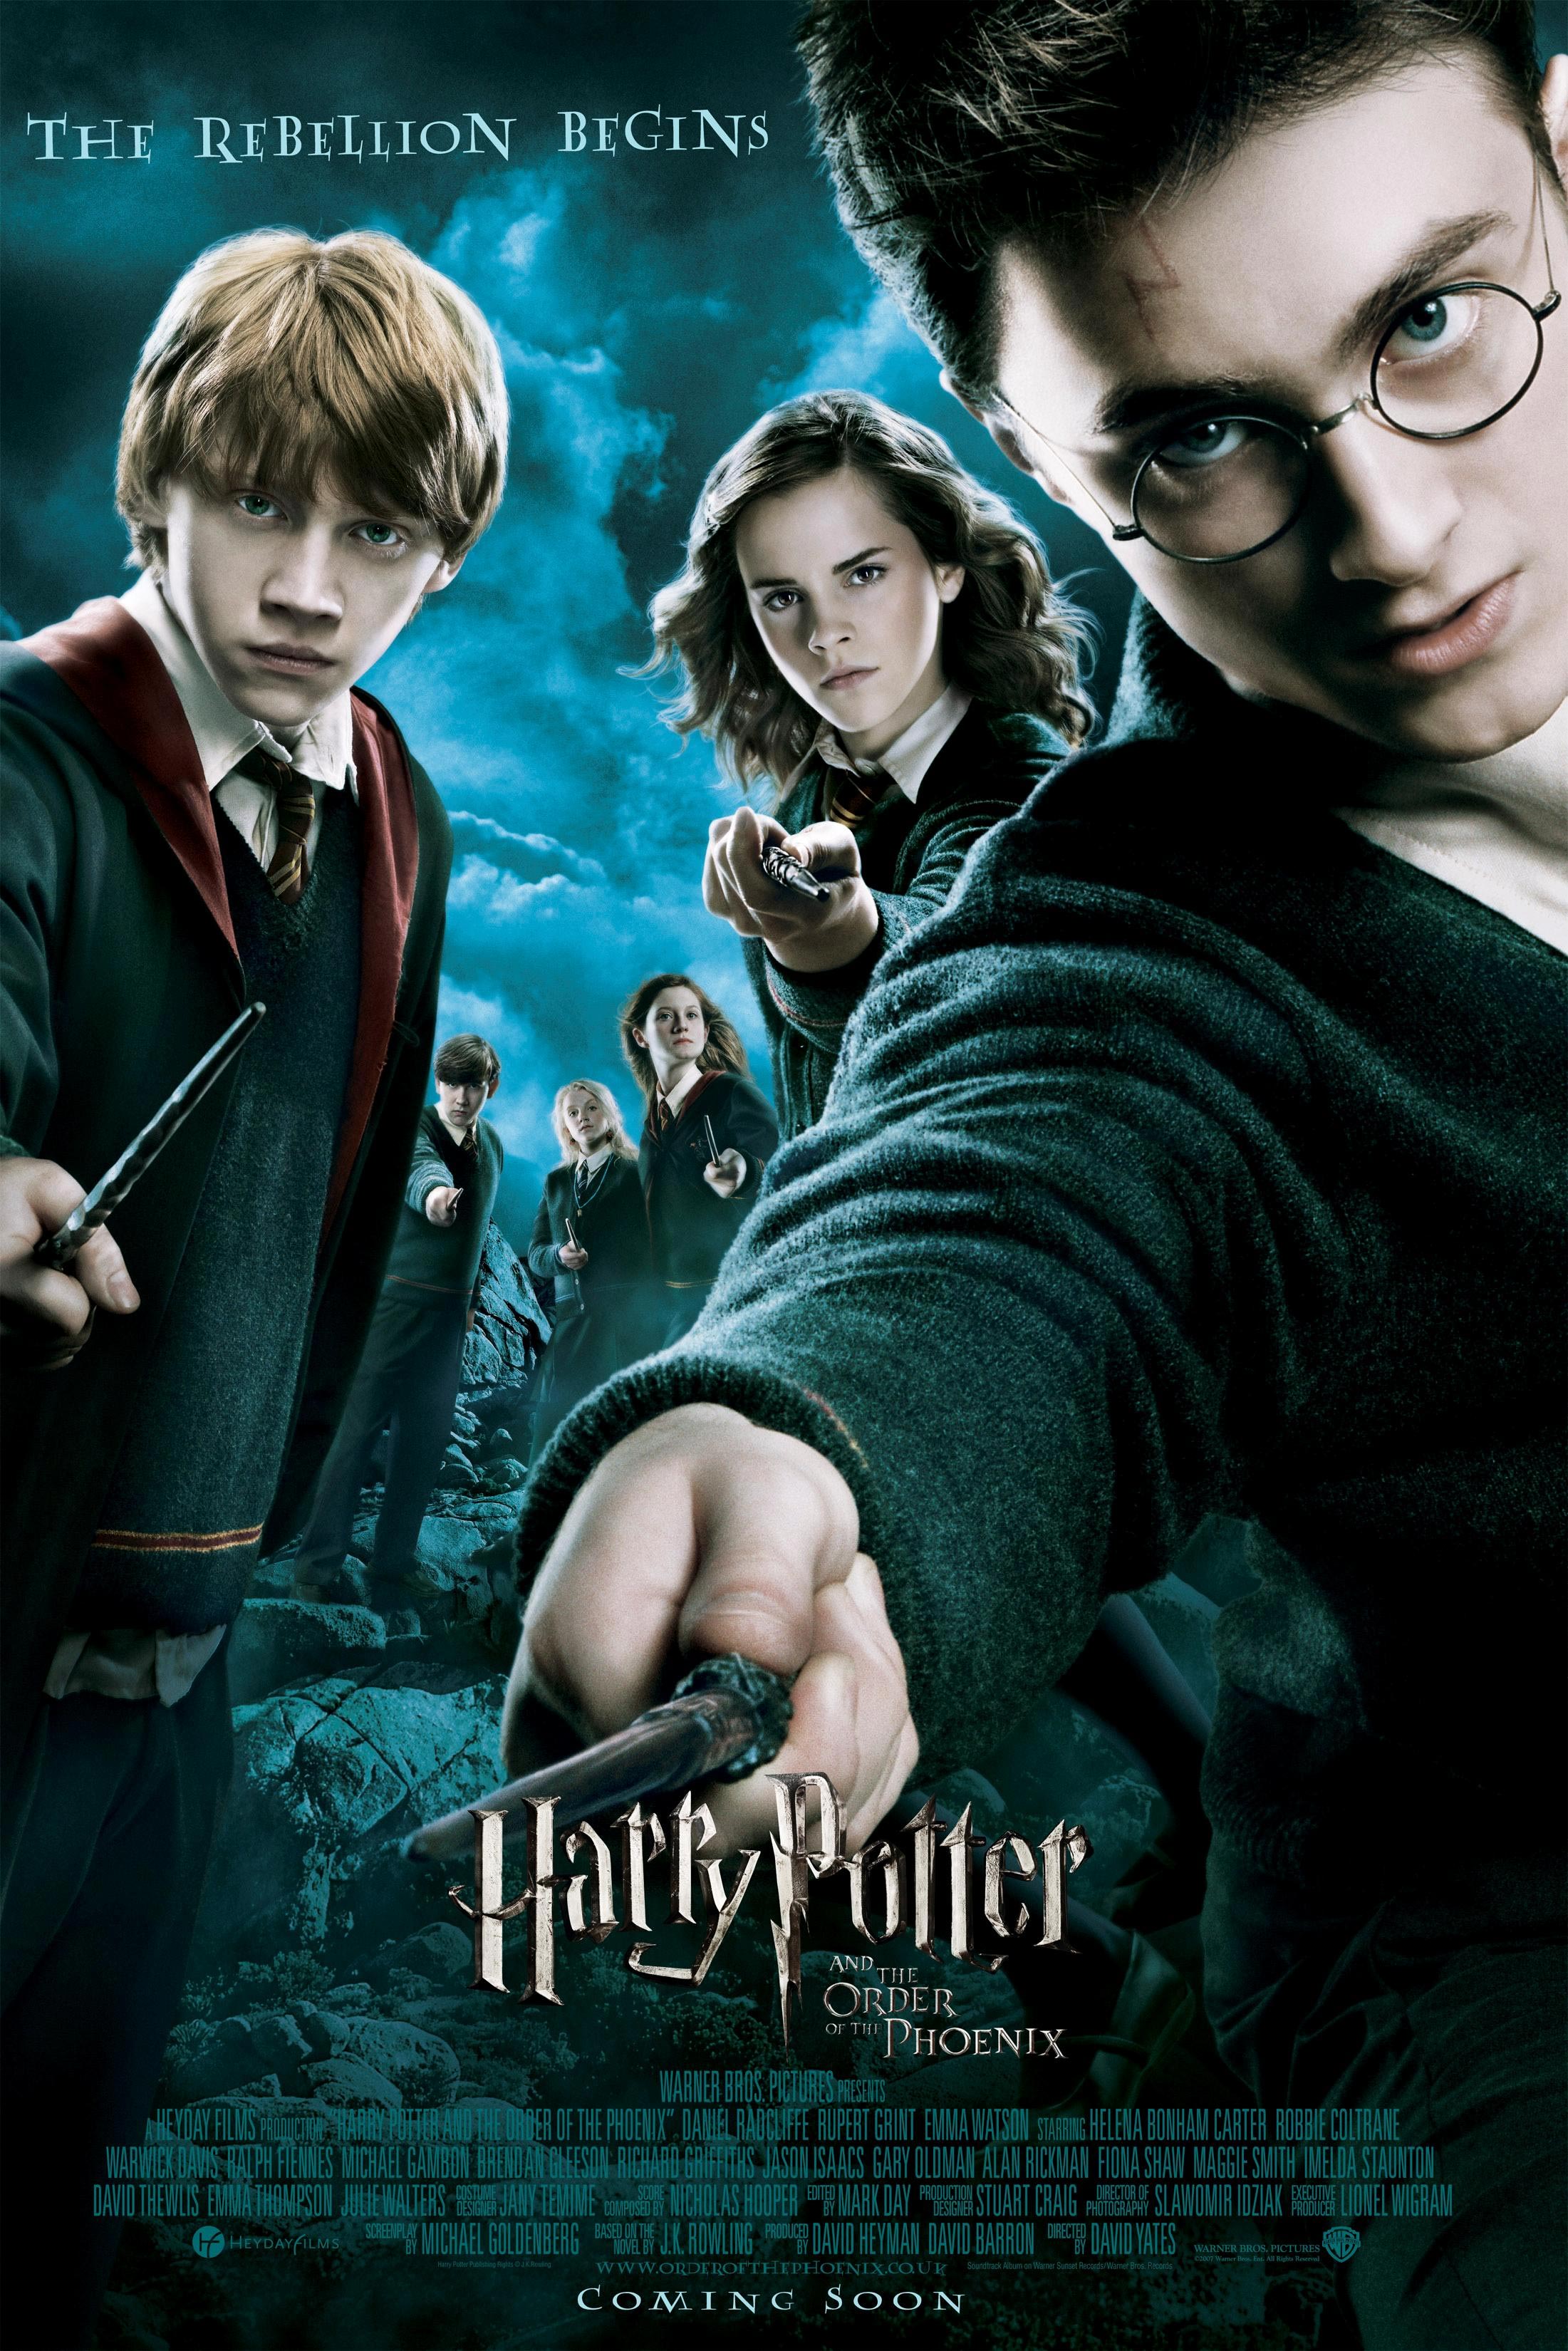 5 Best And 5 Worst Hermione Granger Fan Theories